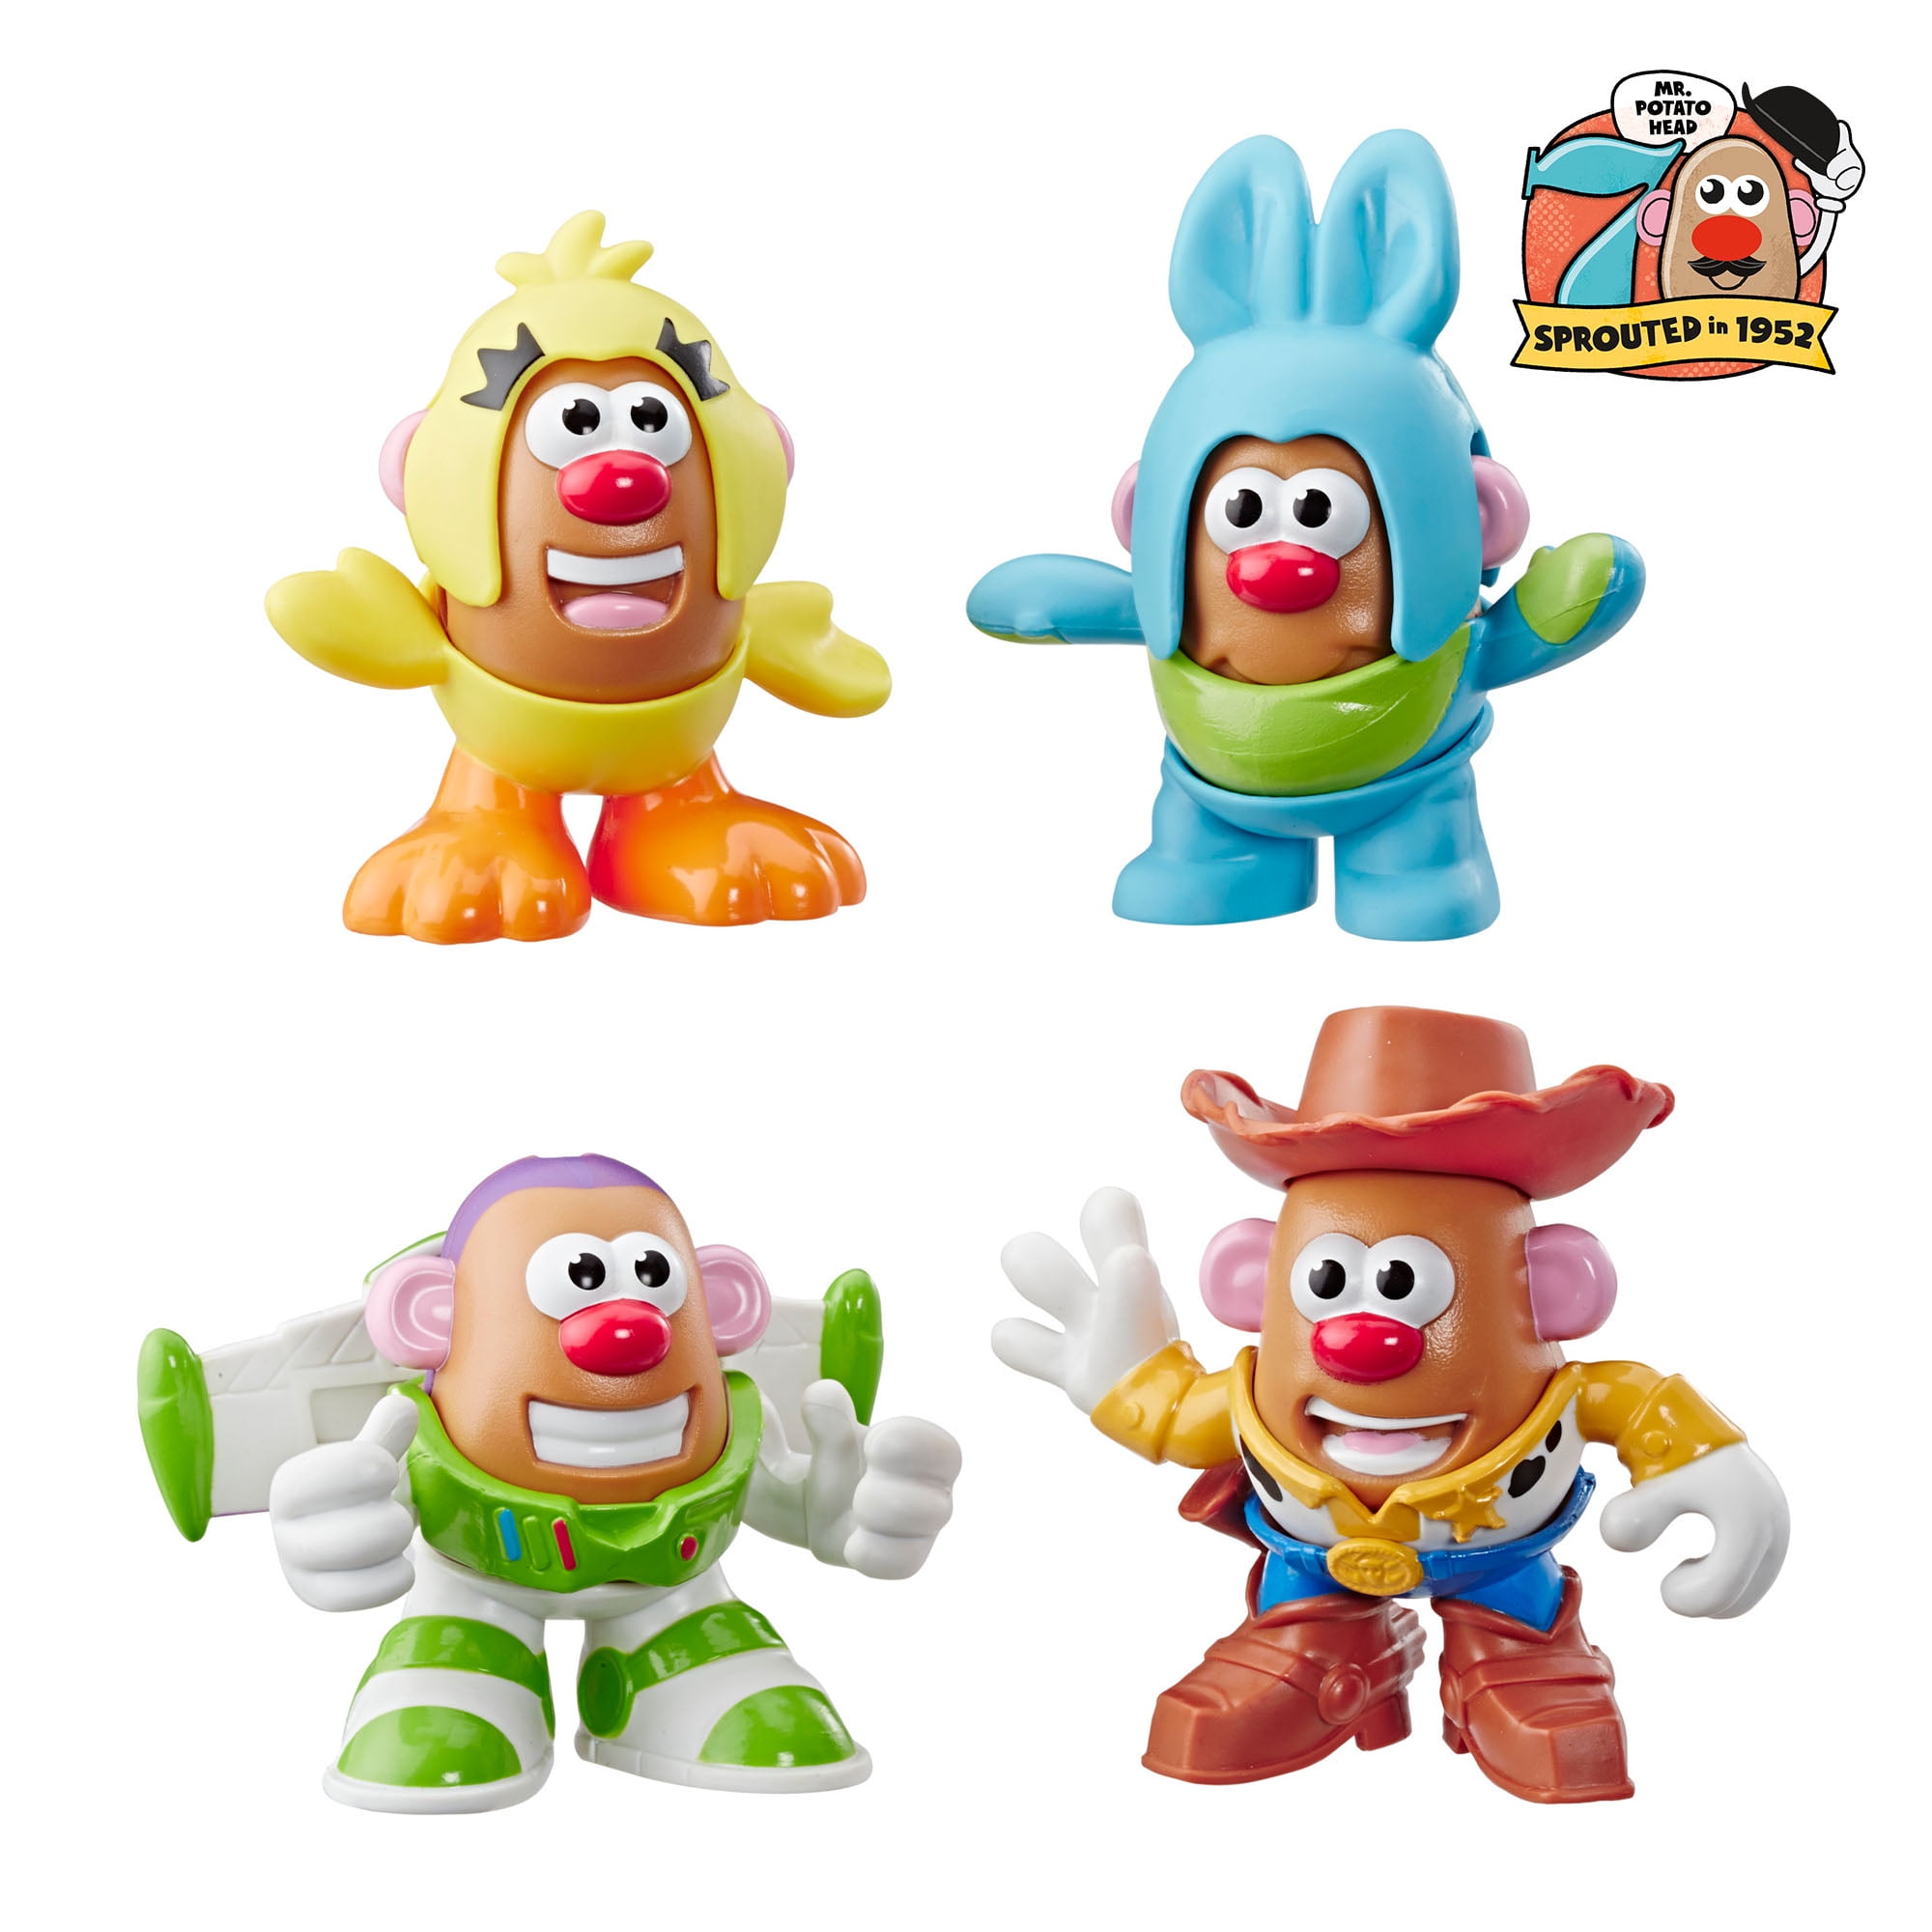 Mr Potato Head Chips Original Discontinued Retro Hasbro Toy & 10 Pcs for sale online 